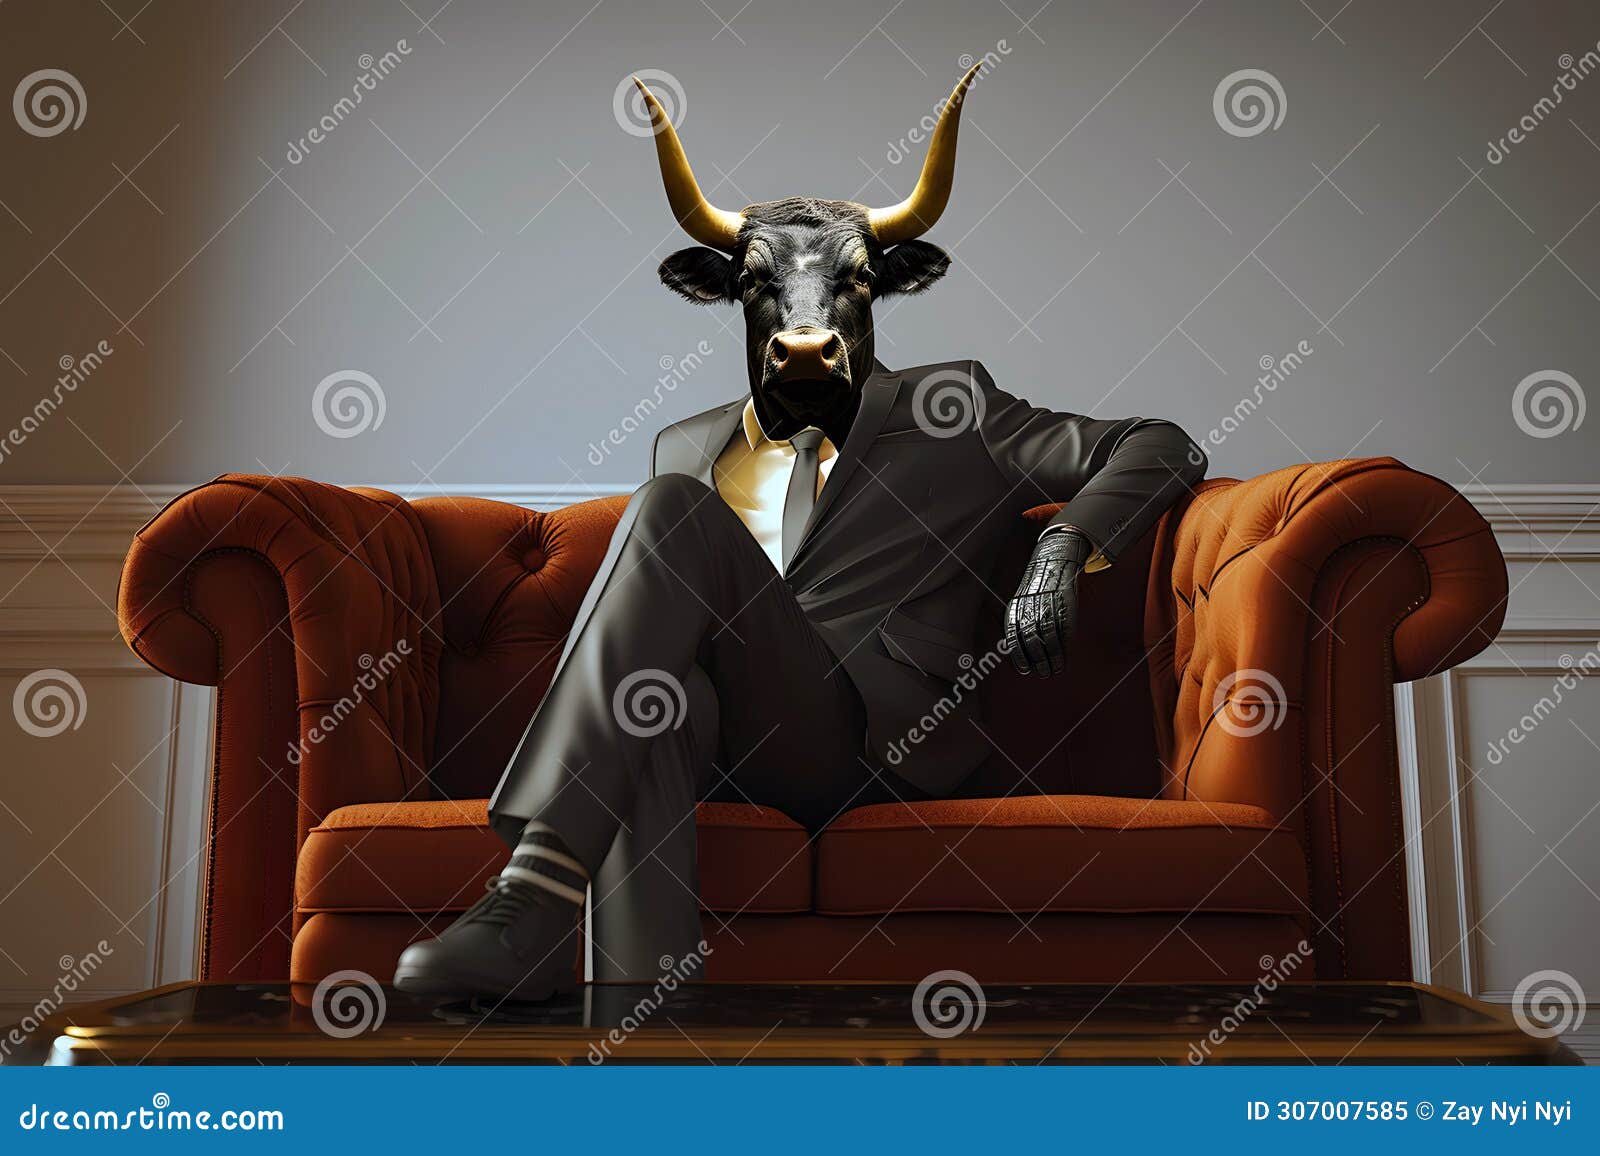 metaphore of businessman with cow head. bullish trend of stock market concept